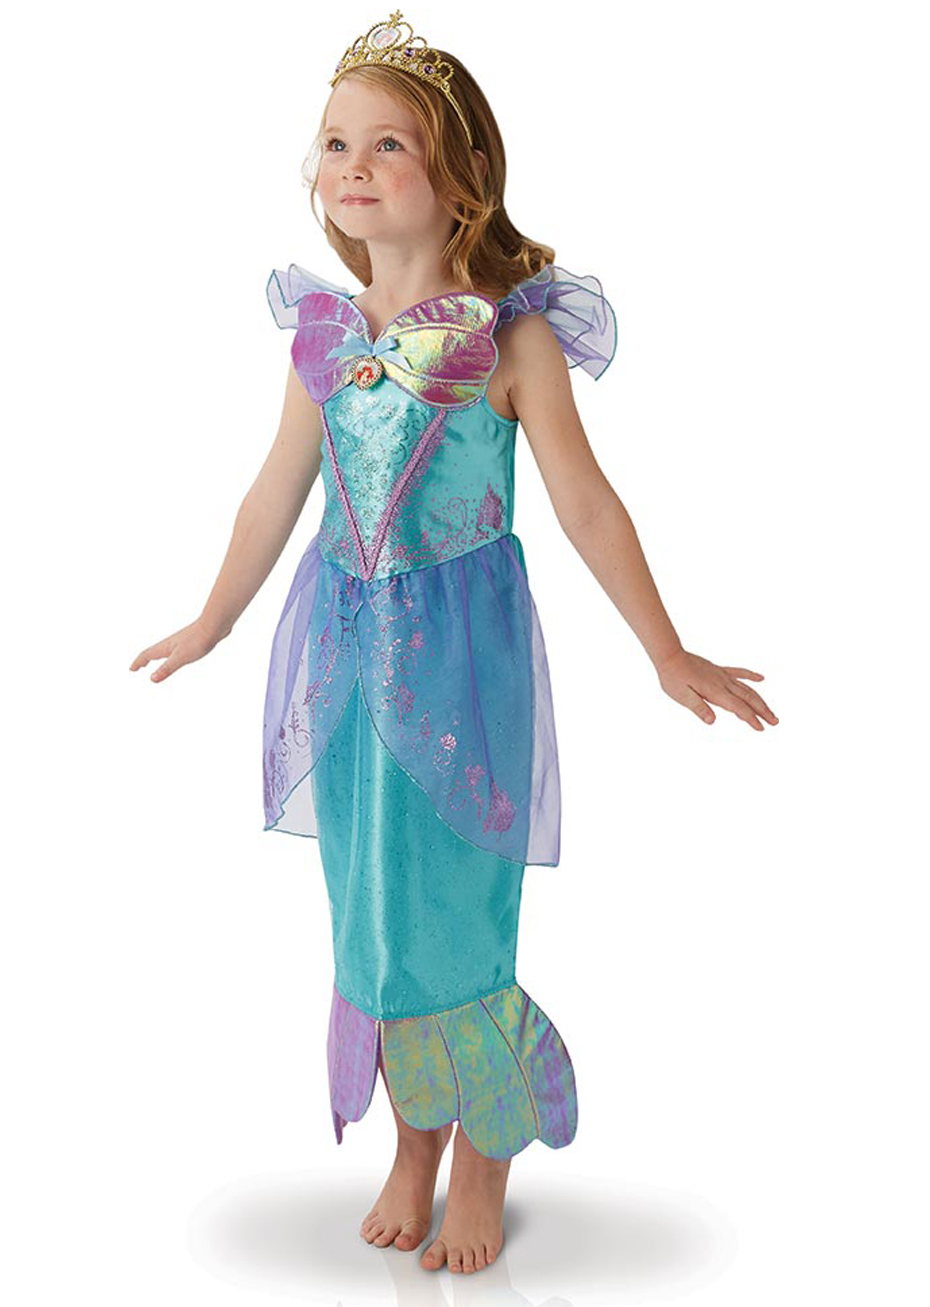 Costume d'Ariel Petite Sirène Fille